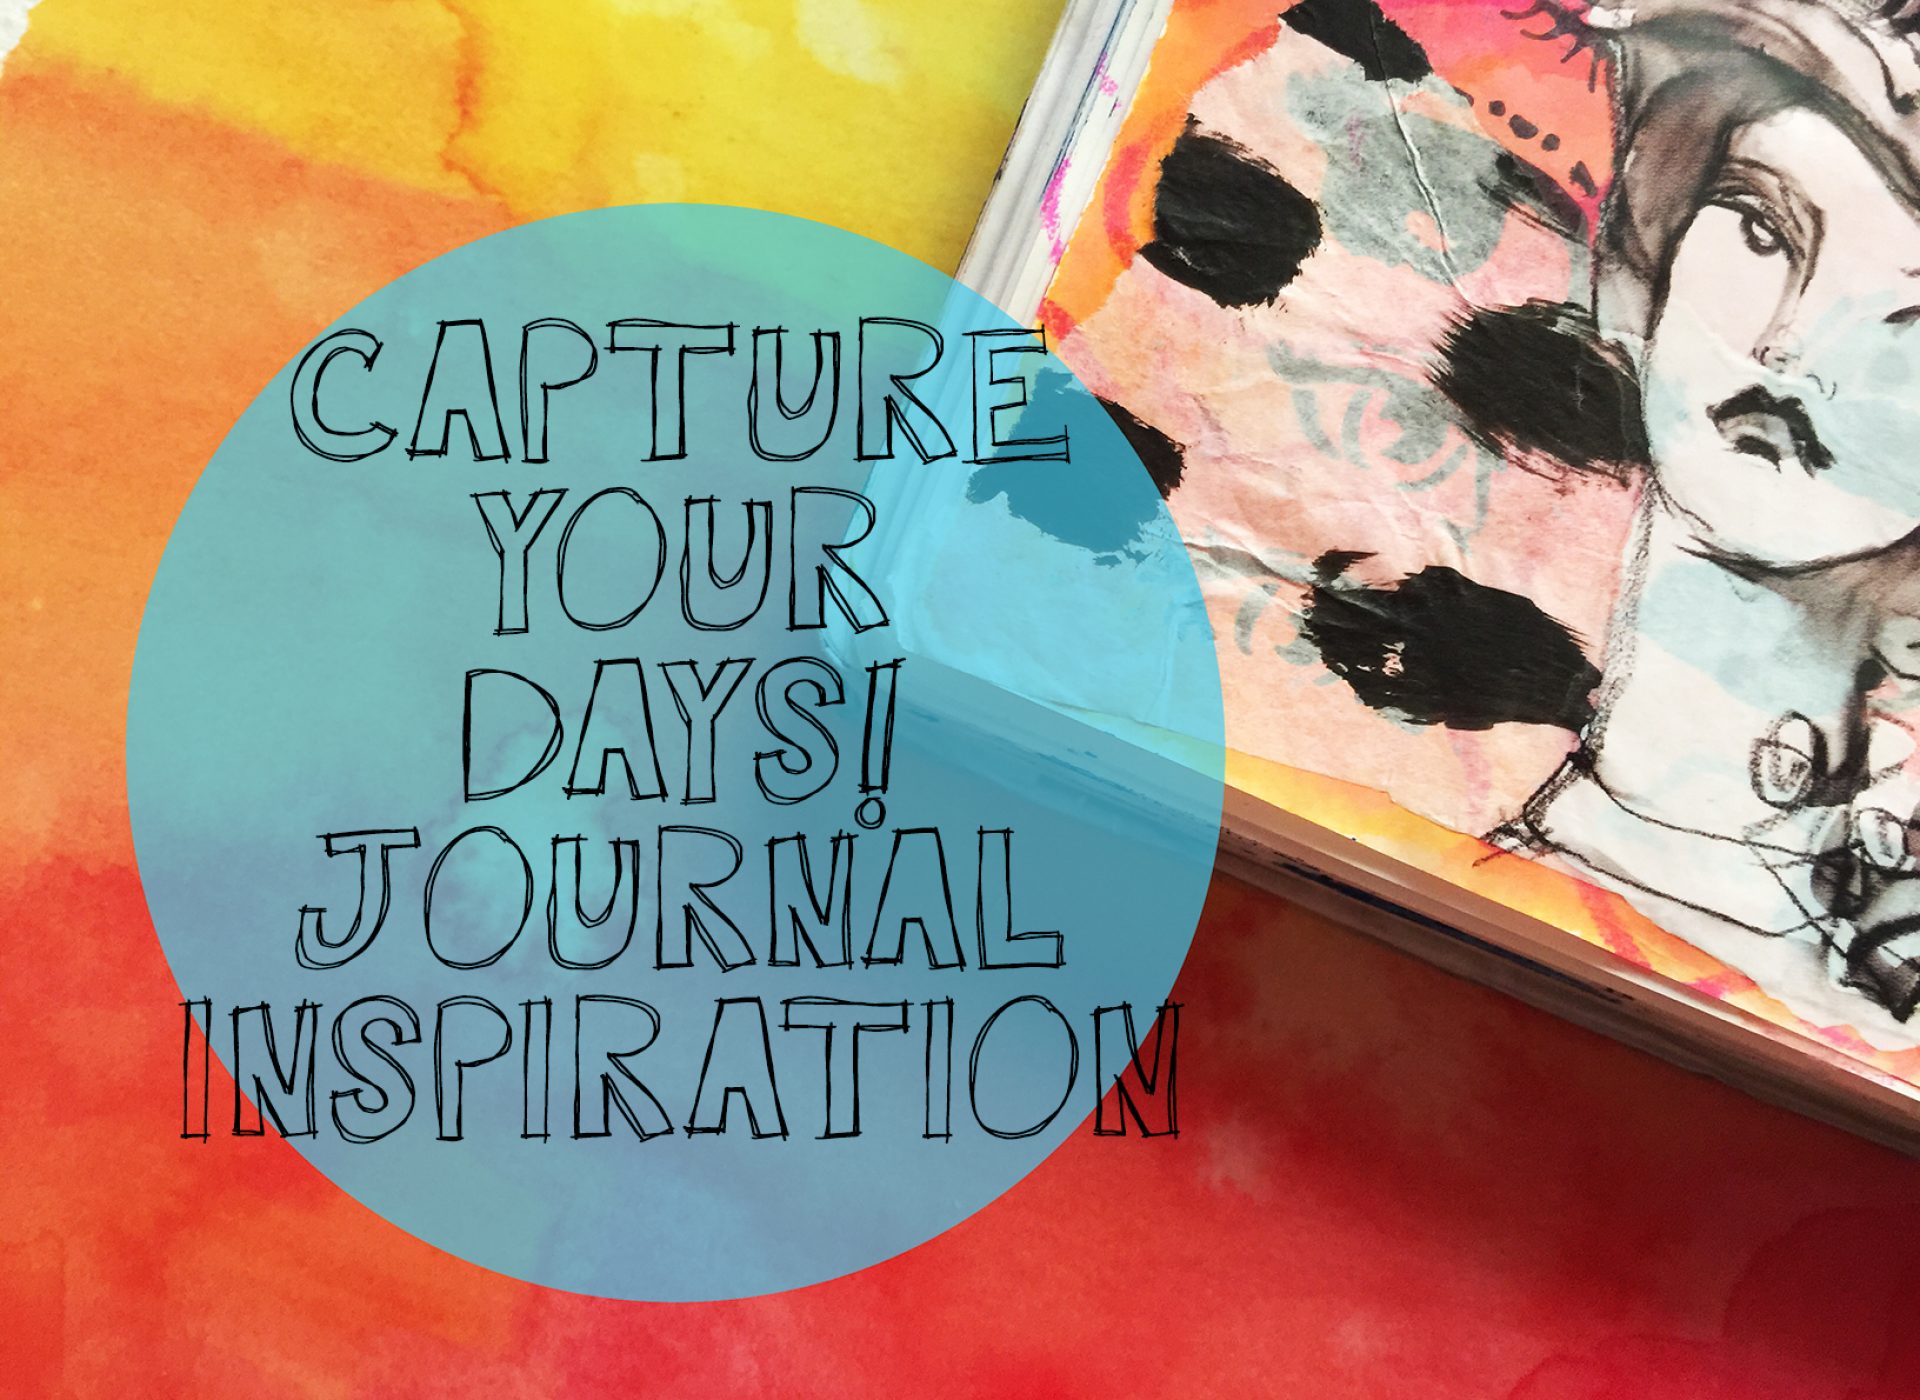 Capture Your Days! – Quick Journal Inspiration